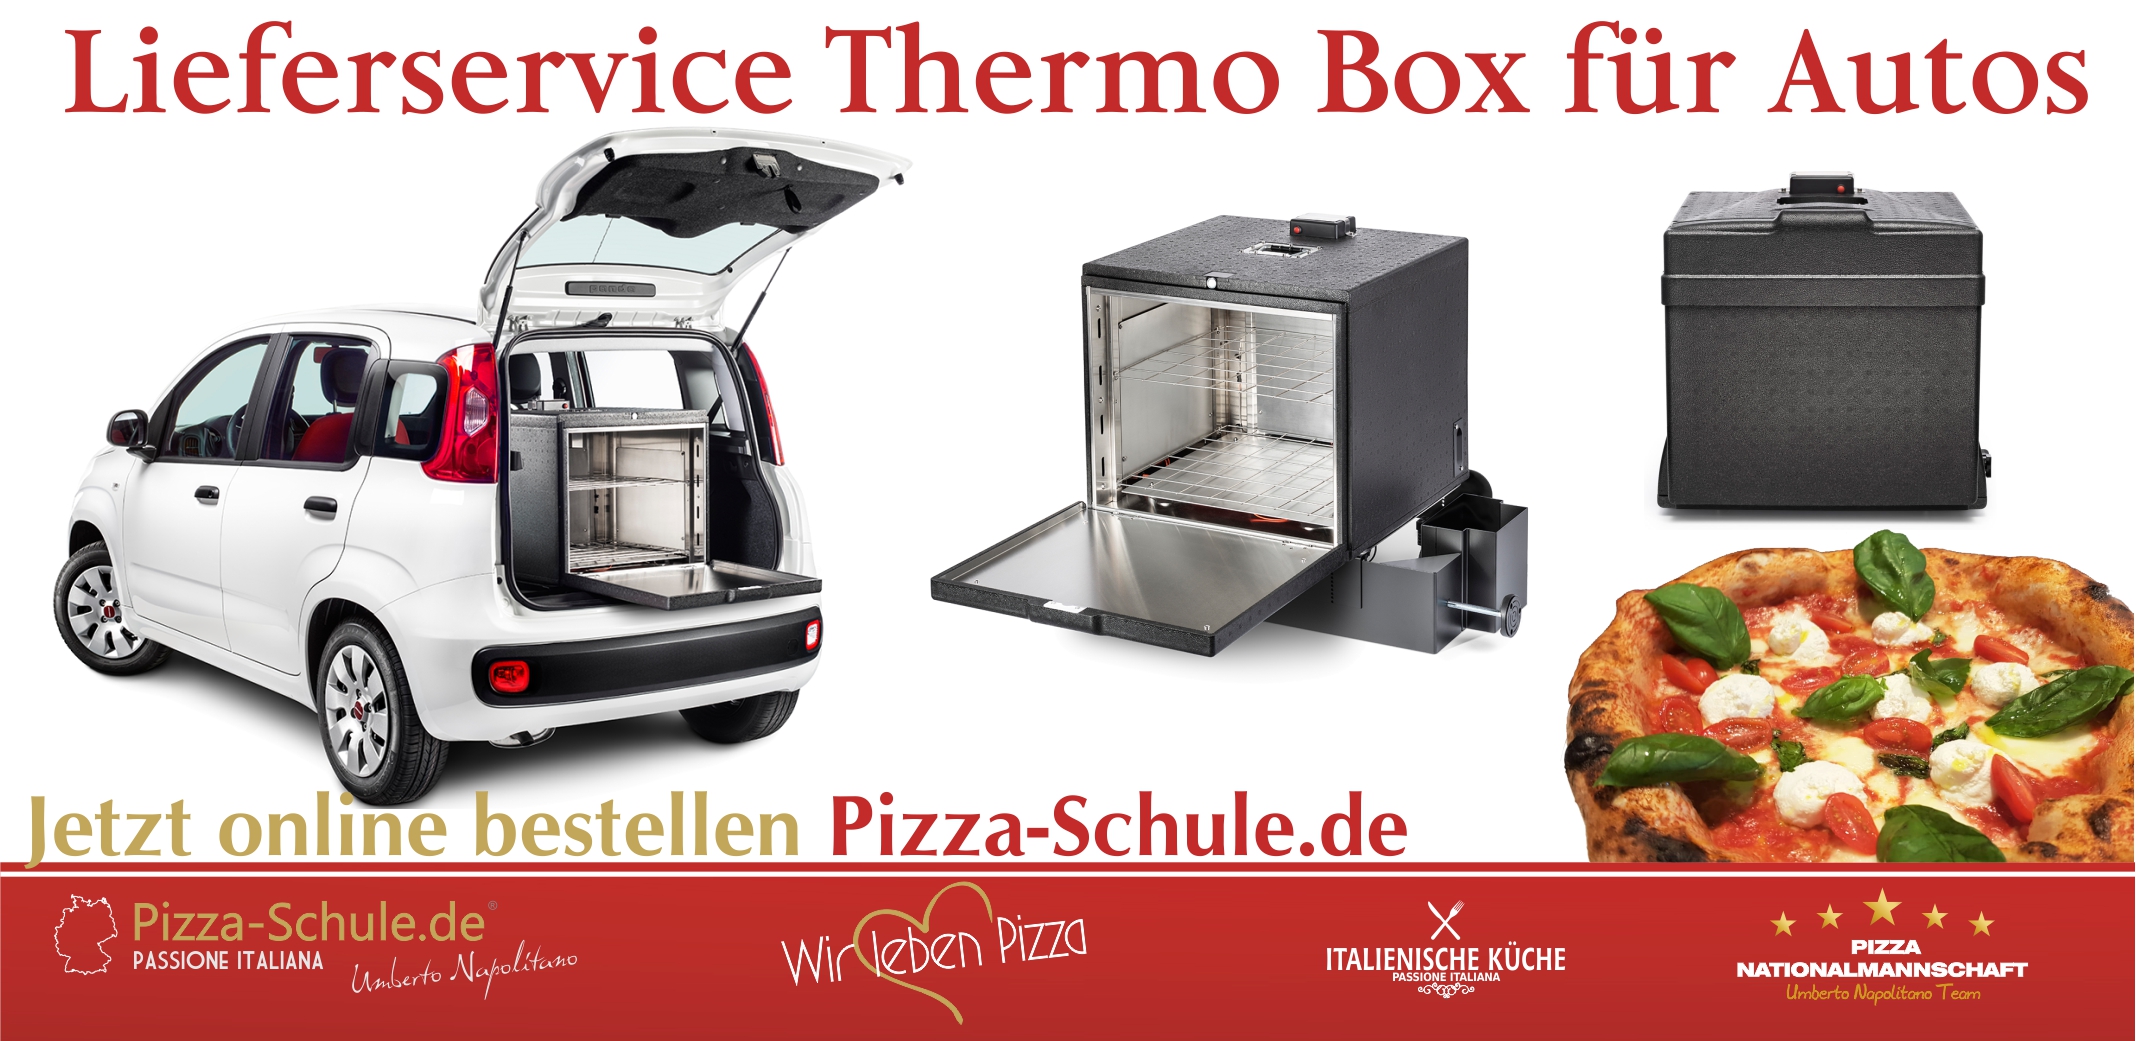 https://pizza-schule.de/wp-content/uploads/2020/04/Lieferservice-Thermo-Box-Pizza-f%C3%BCr-Autos-2020.jpg